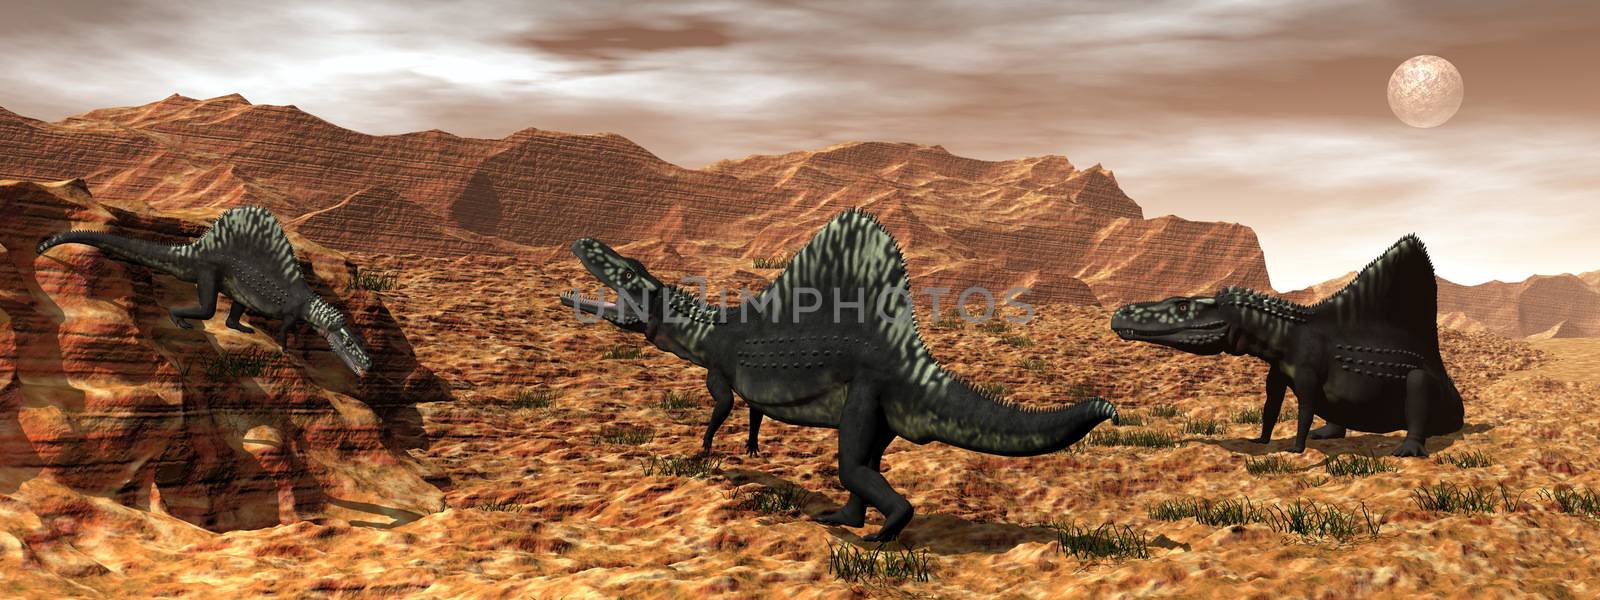 Arizonasaurus dinosaurs in the desert - 3D render